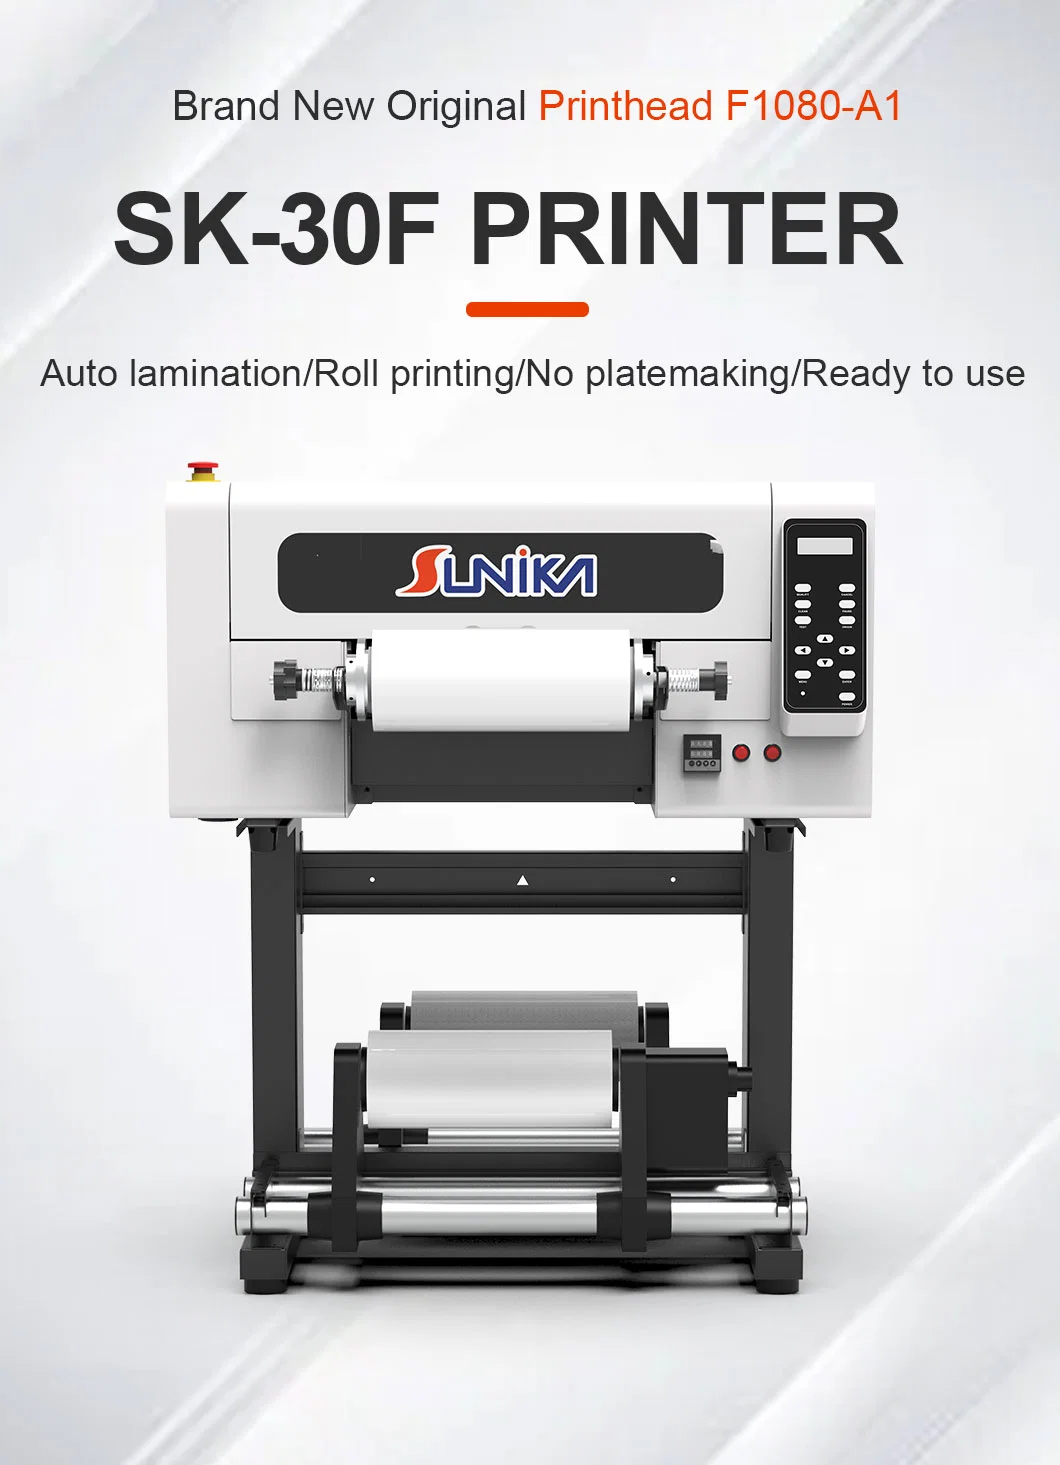 Sunika Wholesale Industrial Multi Color Print Fabric A3 Digital UV Crystal Label Printer with Epson I3200 Printhead